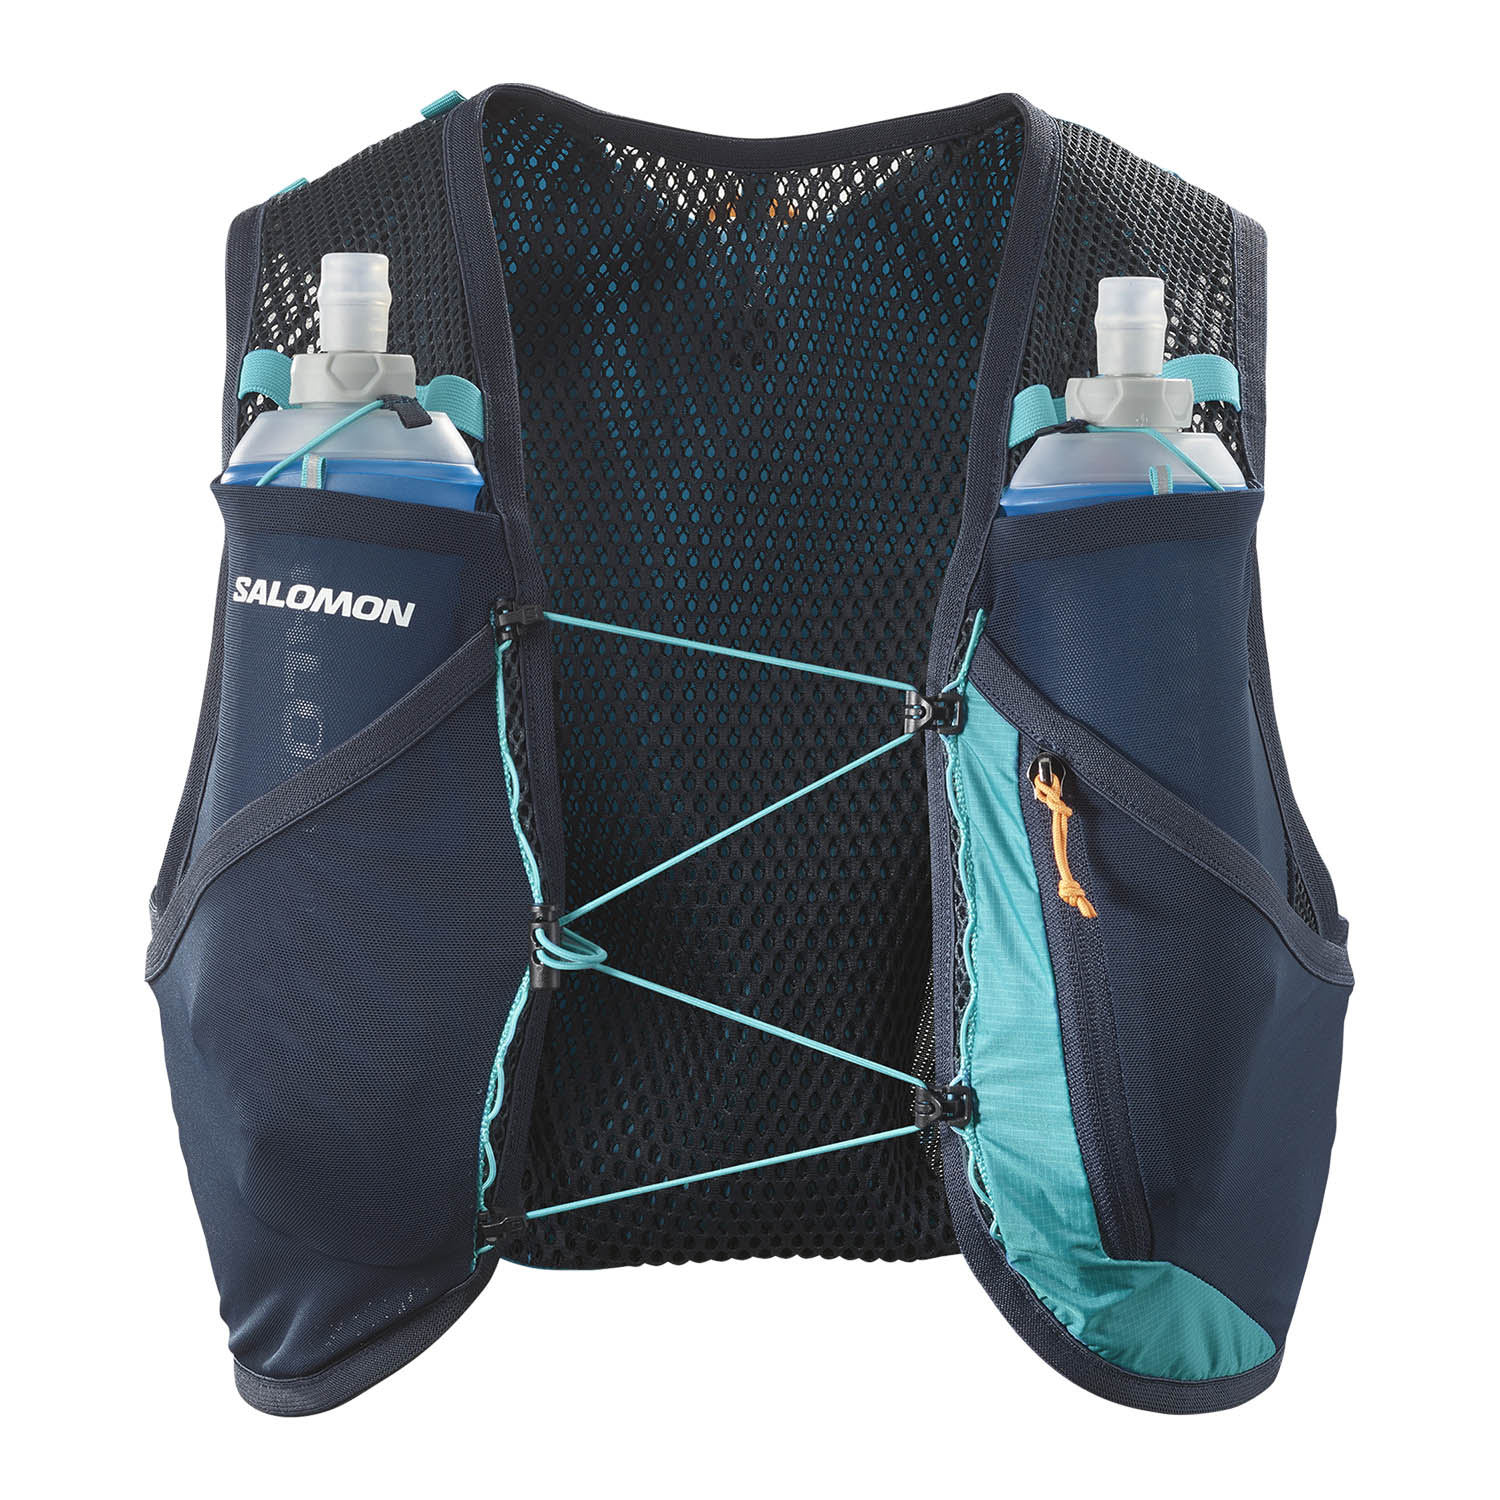 Salomon Active Skin 4 Set Backpack - Tahitian Tide/Carbon/Peacock Blue